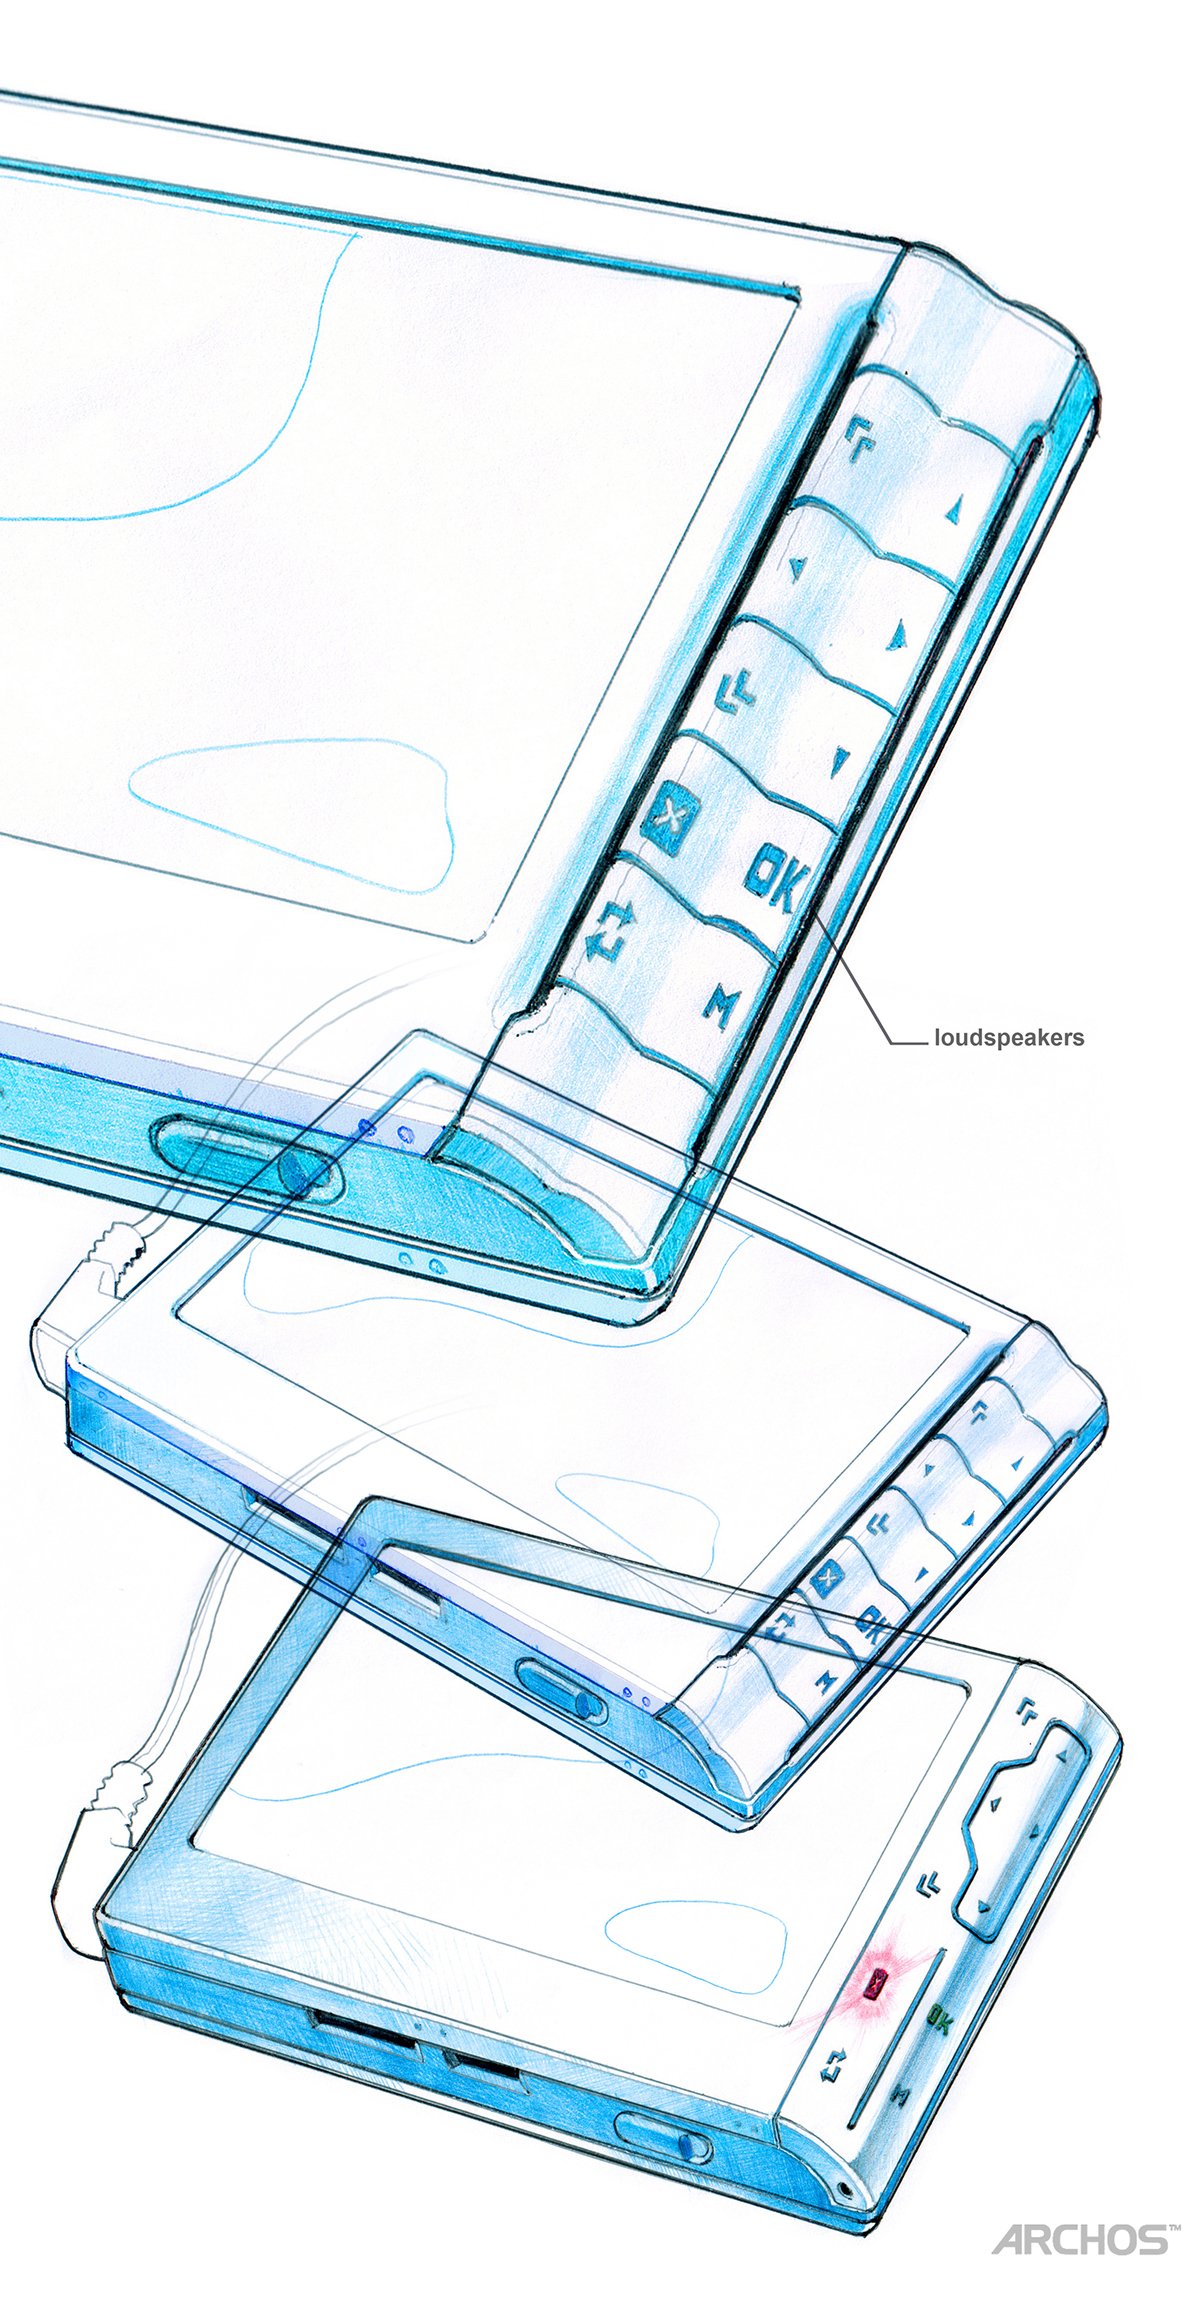 Adobe Portfolio design jewell pen electronic draw sketches